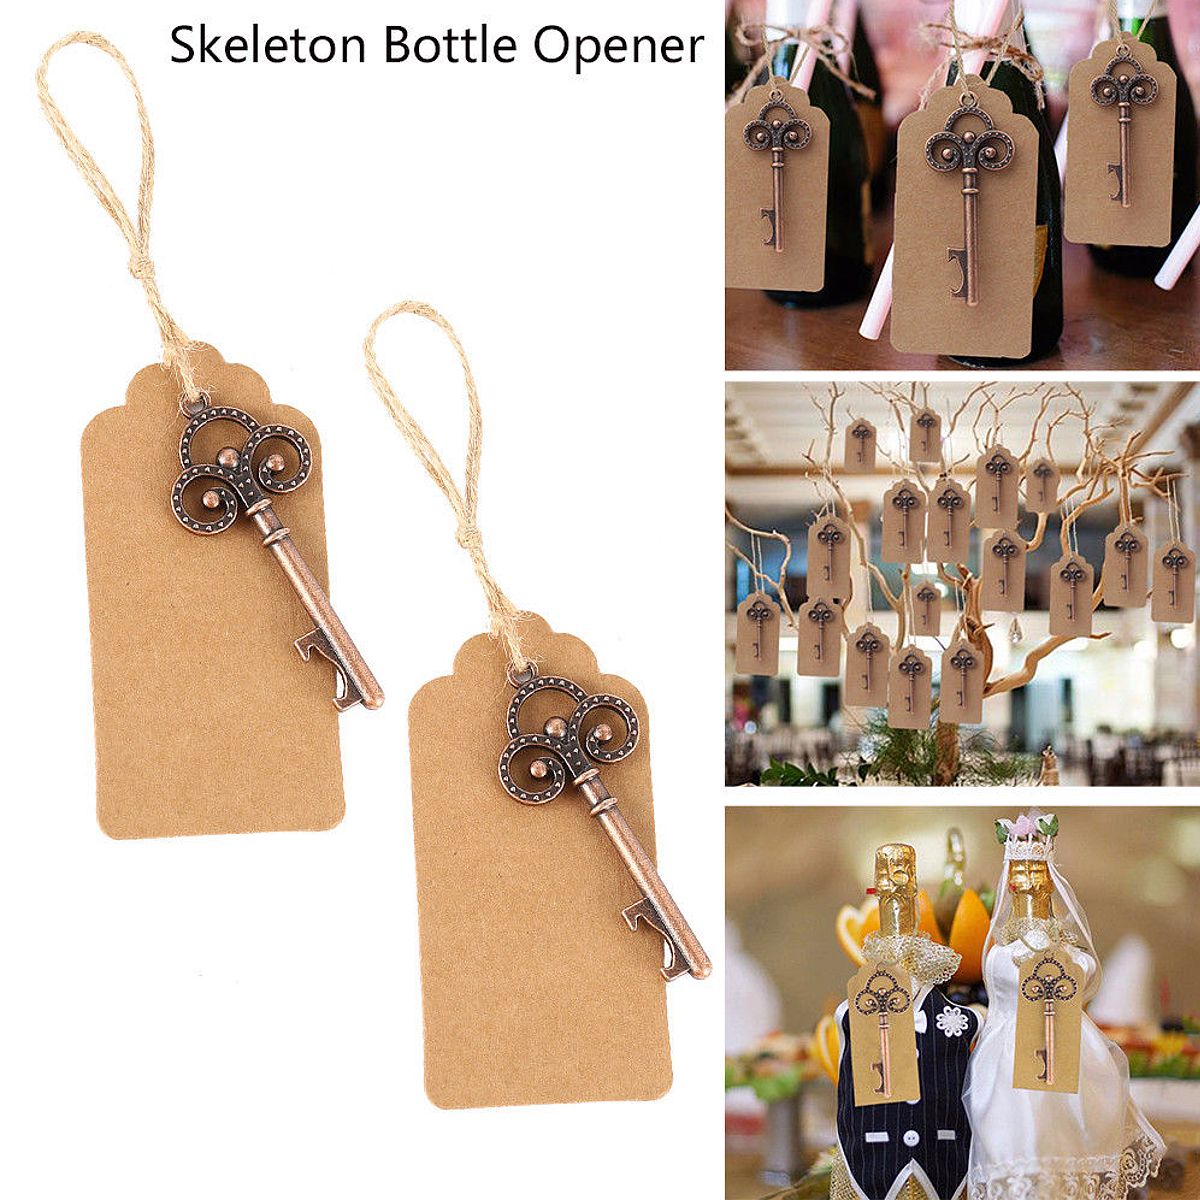 50pcs-Antique-Skeleton-Key-Bottle-Opener-Multifunctional-Tools-with-Kraft-Tag-Card-1394701